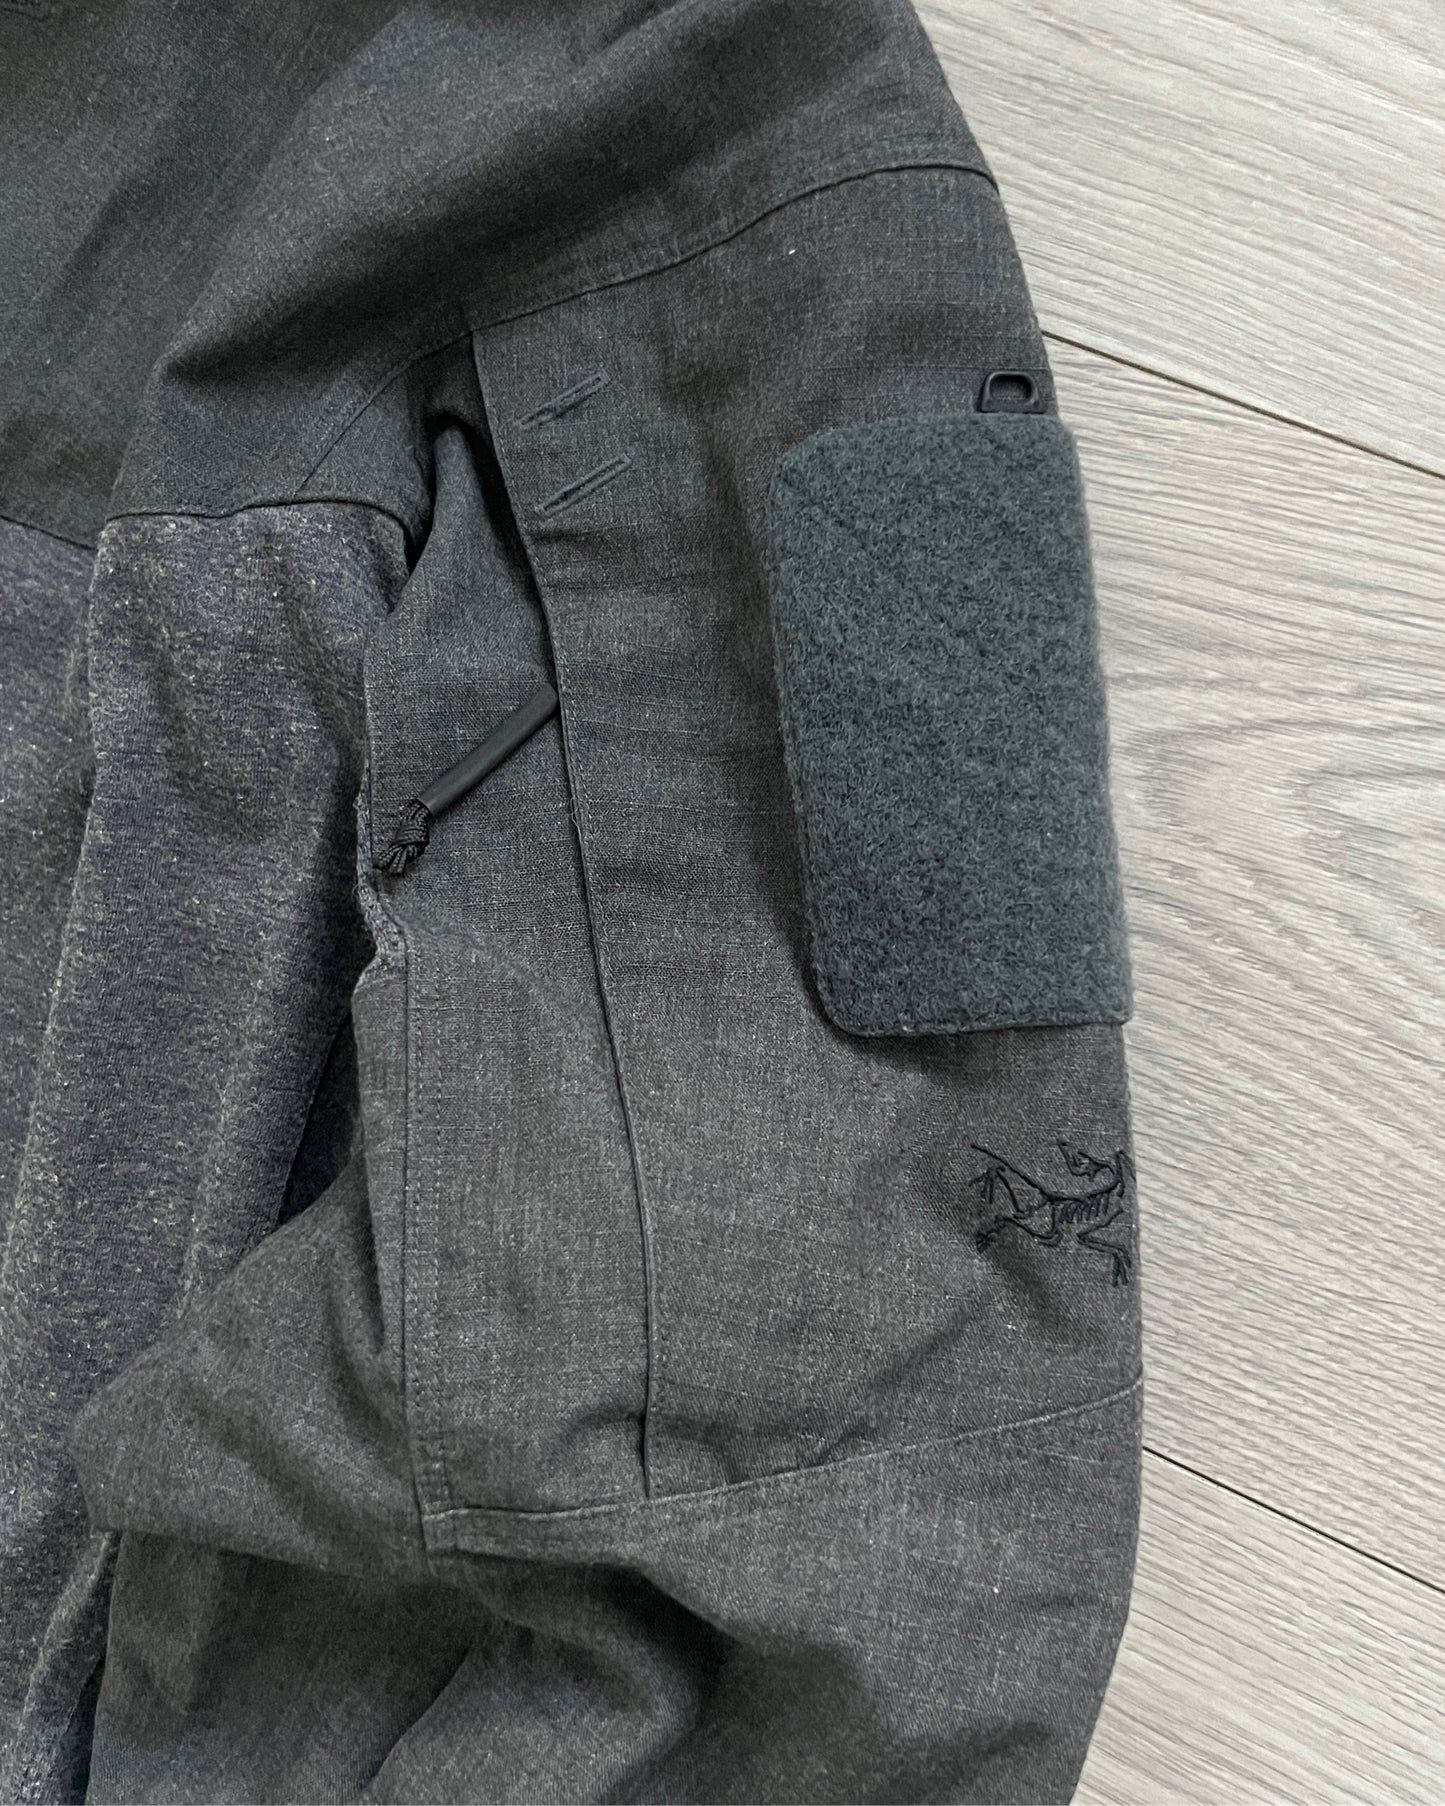 Arcteryx LEAF Assault Combat Shirt Wolf Grey, Made in El Salvador - Size M, L & XXL